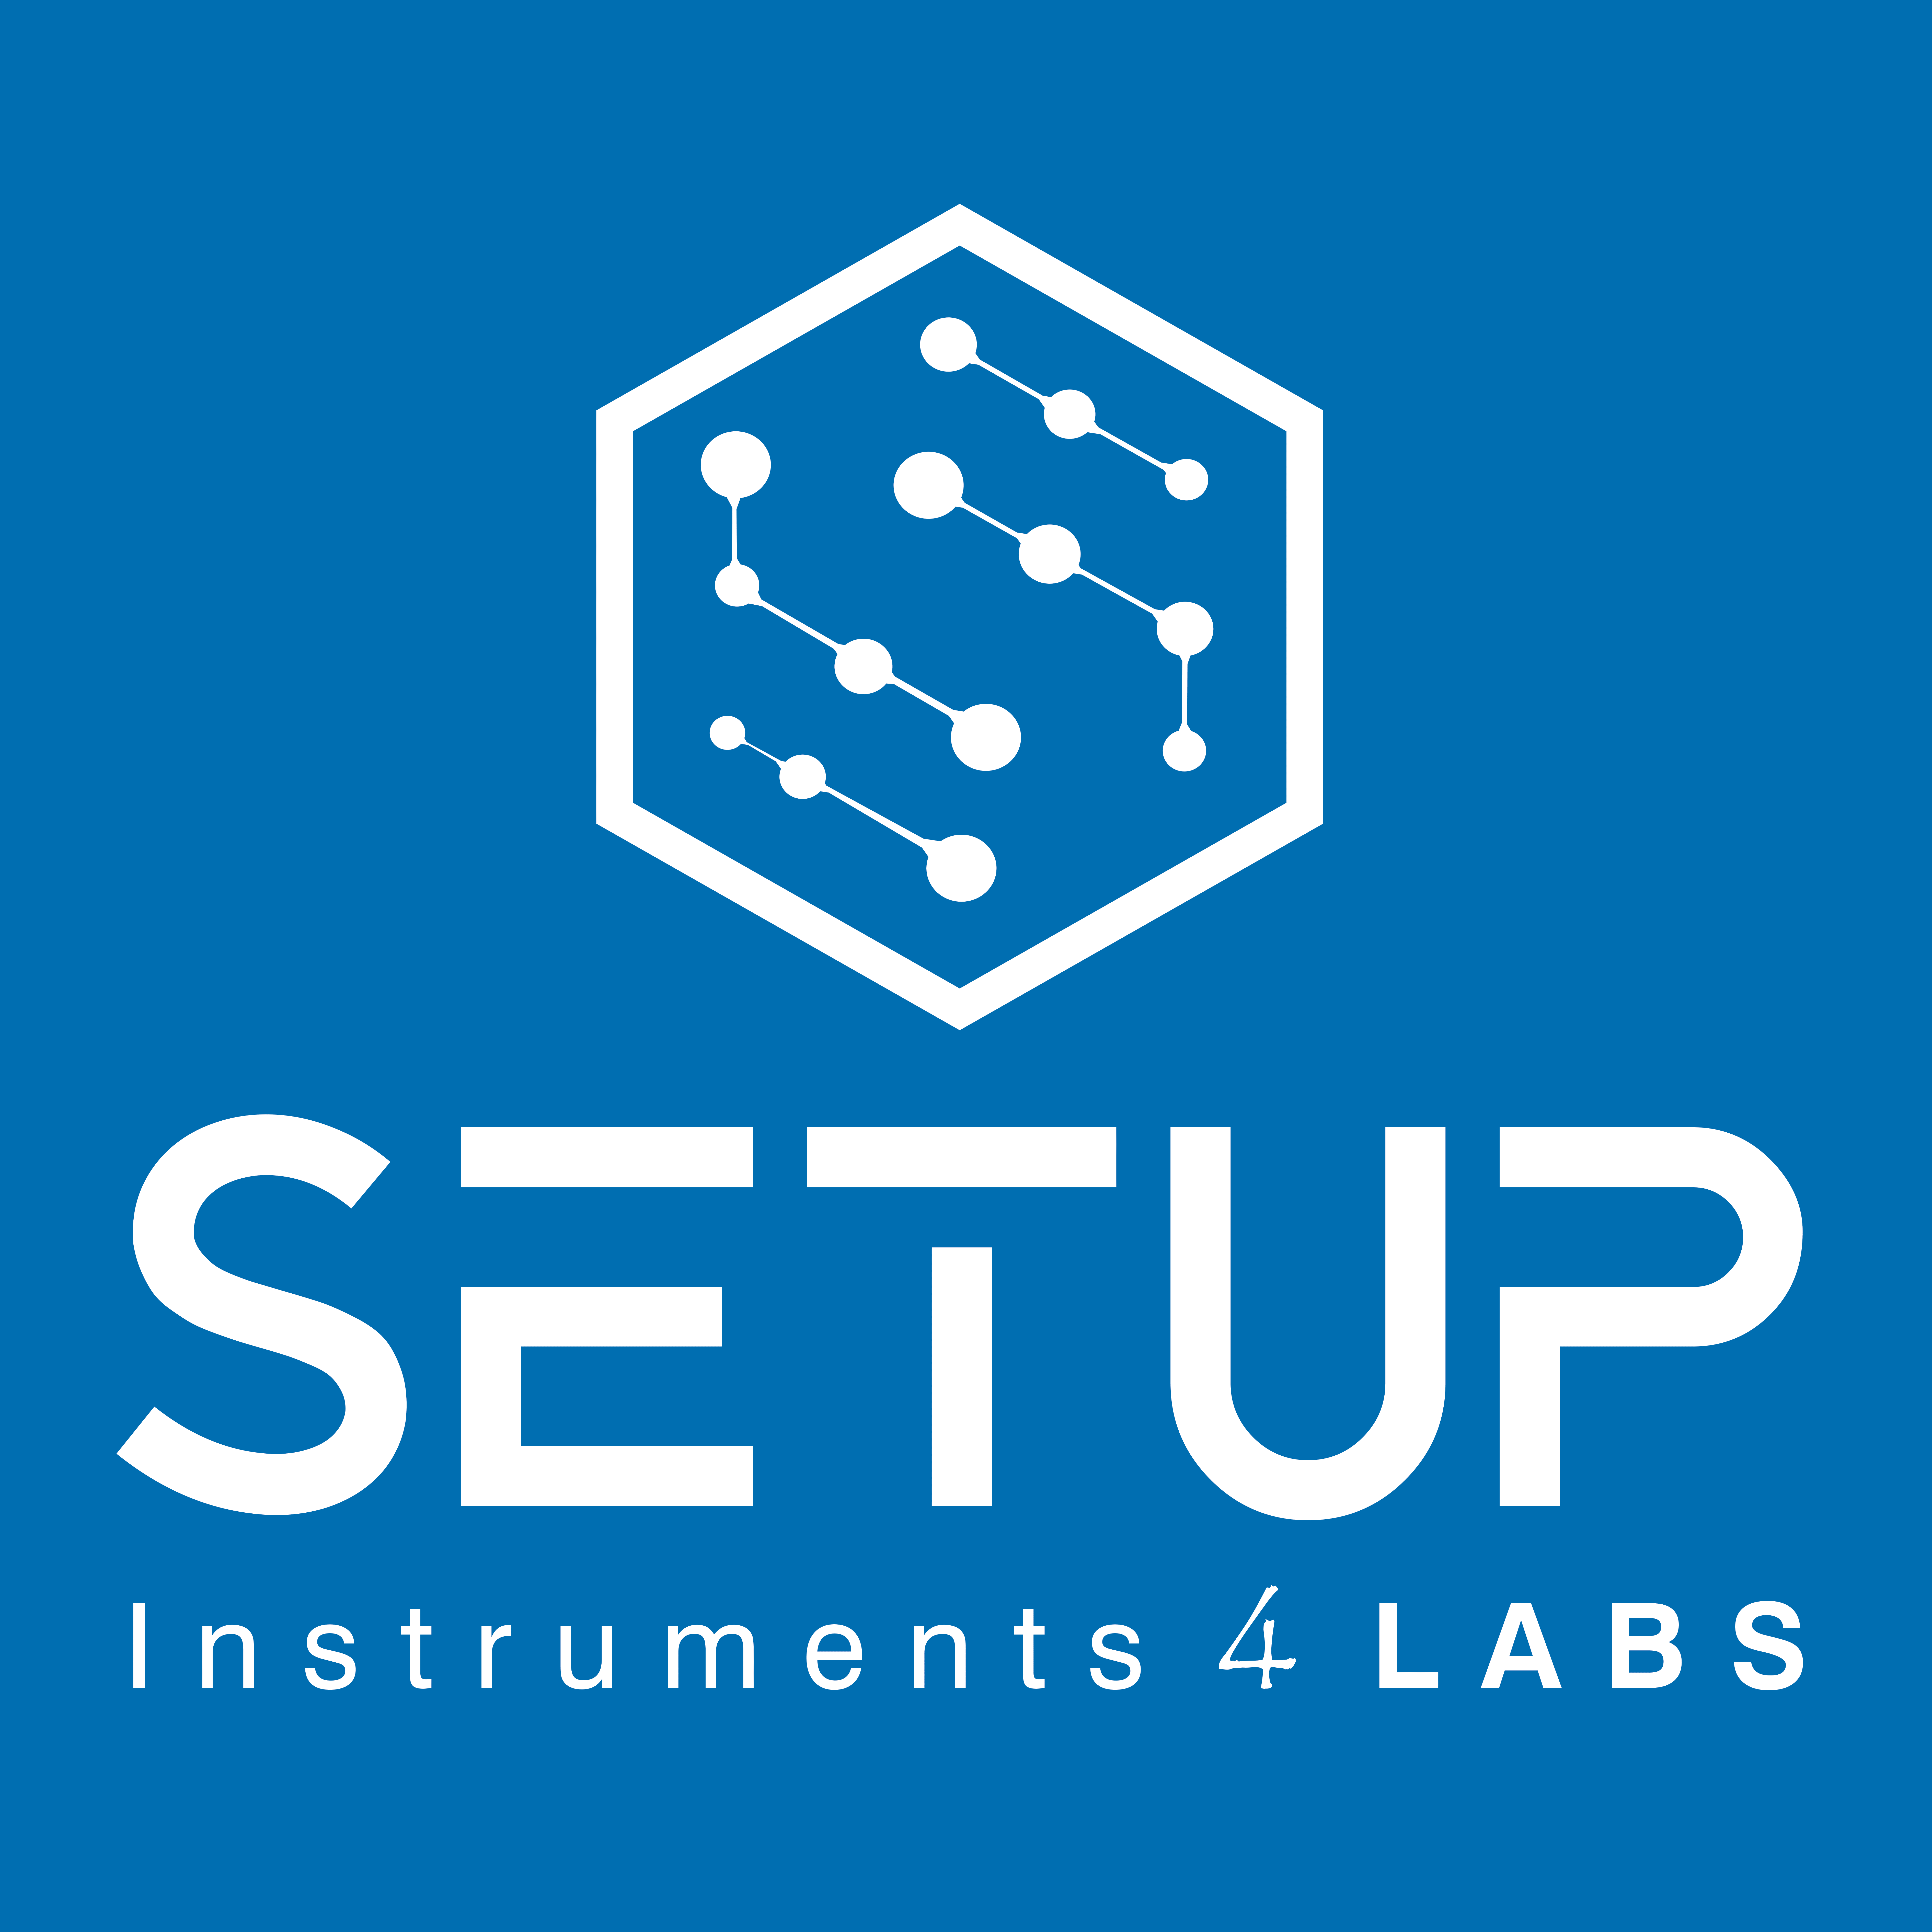 SETUP Instruments4Labs logo